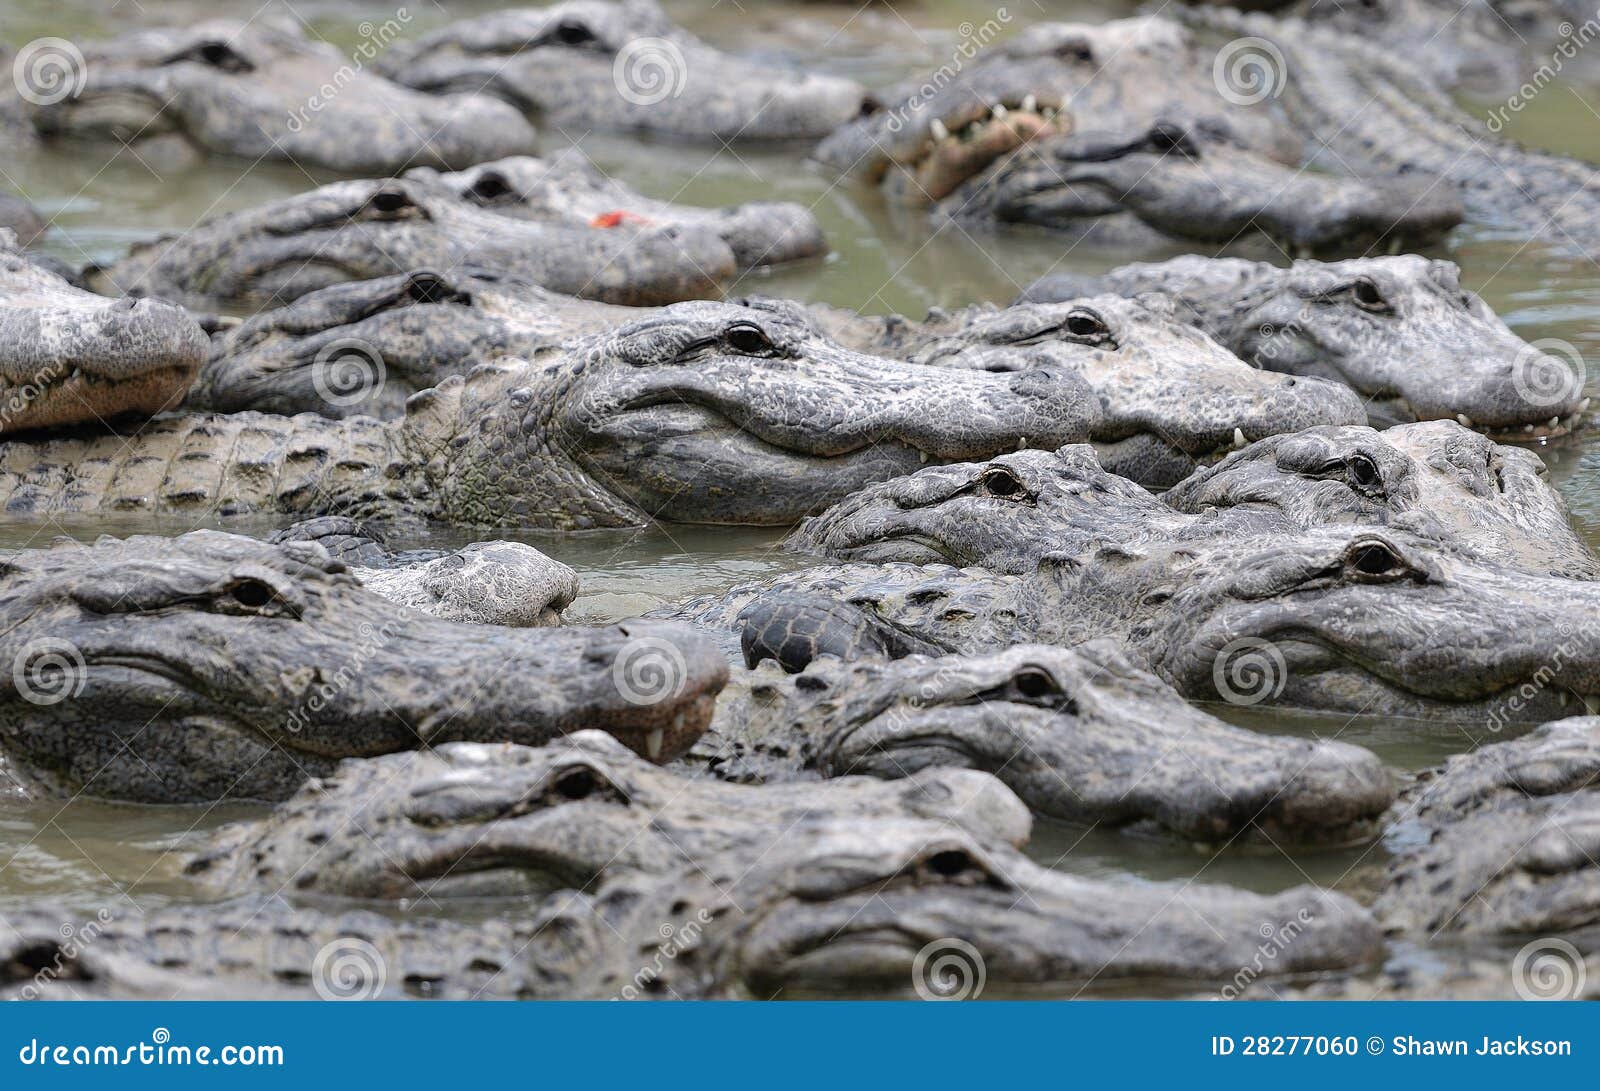 Group Of Alligators 8